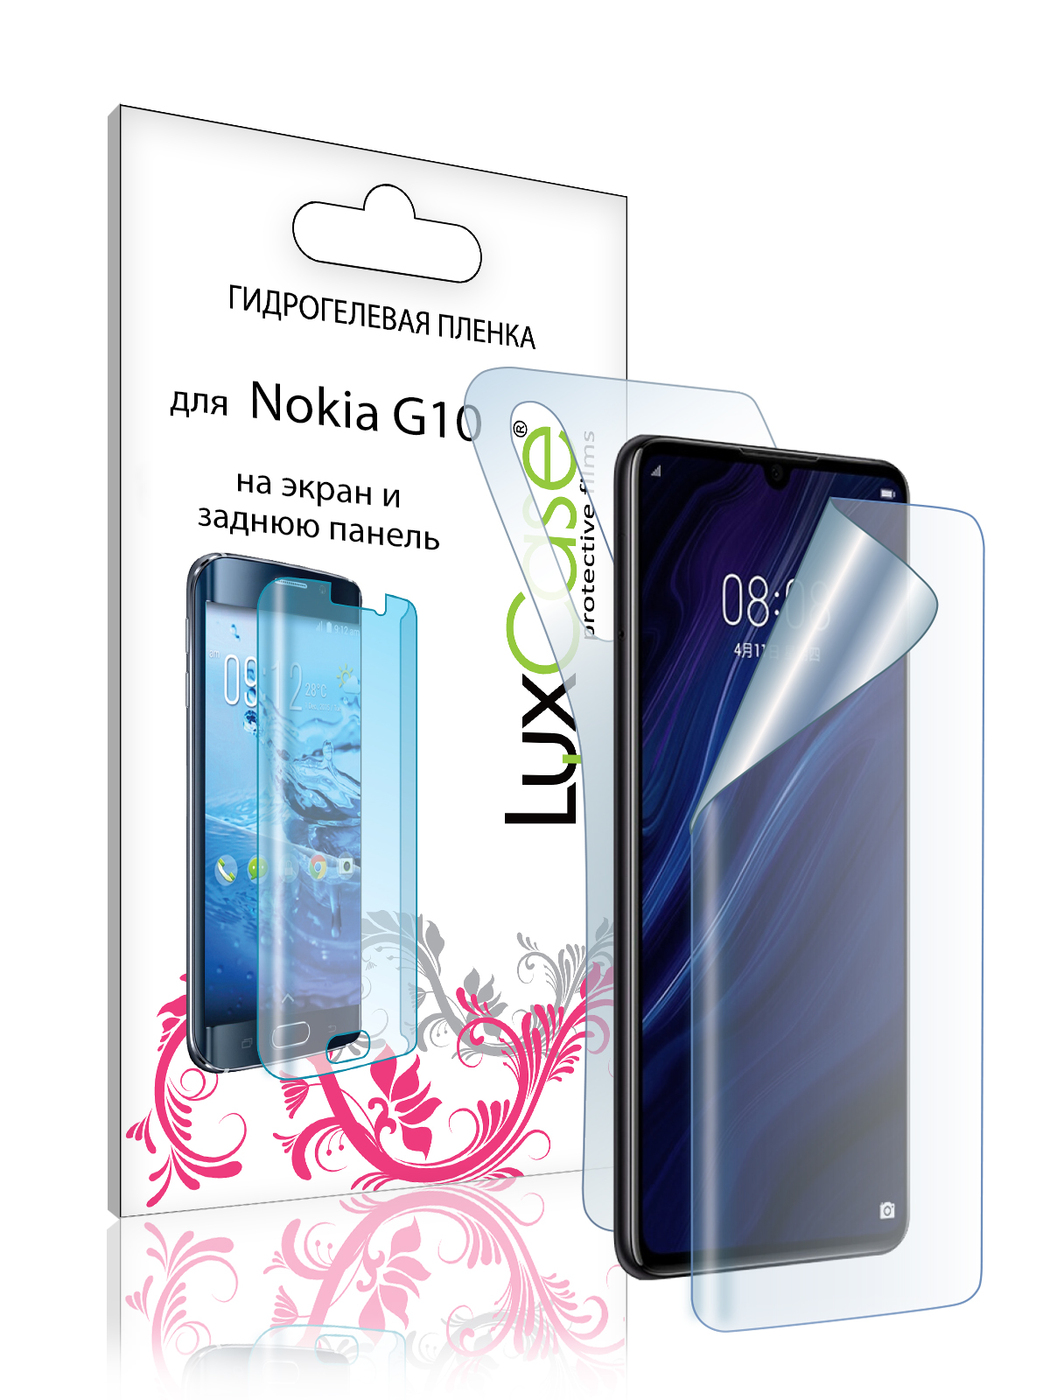 Пленка гидрогелевая LuxCase для Nokia G20 Front and Back Transparent 86394 гидрогелевая пленка luxcase для nokia g10 back transparent 86390